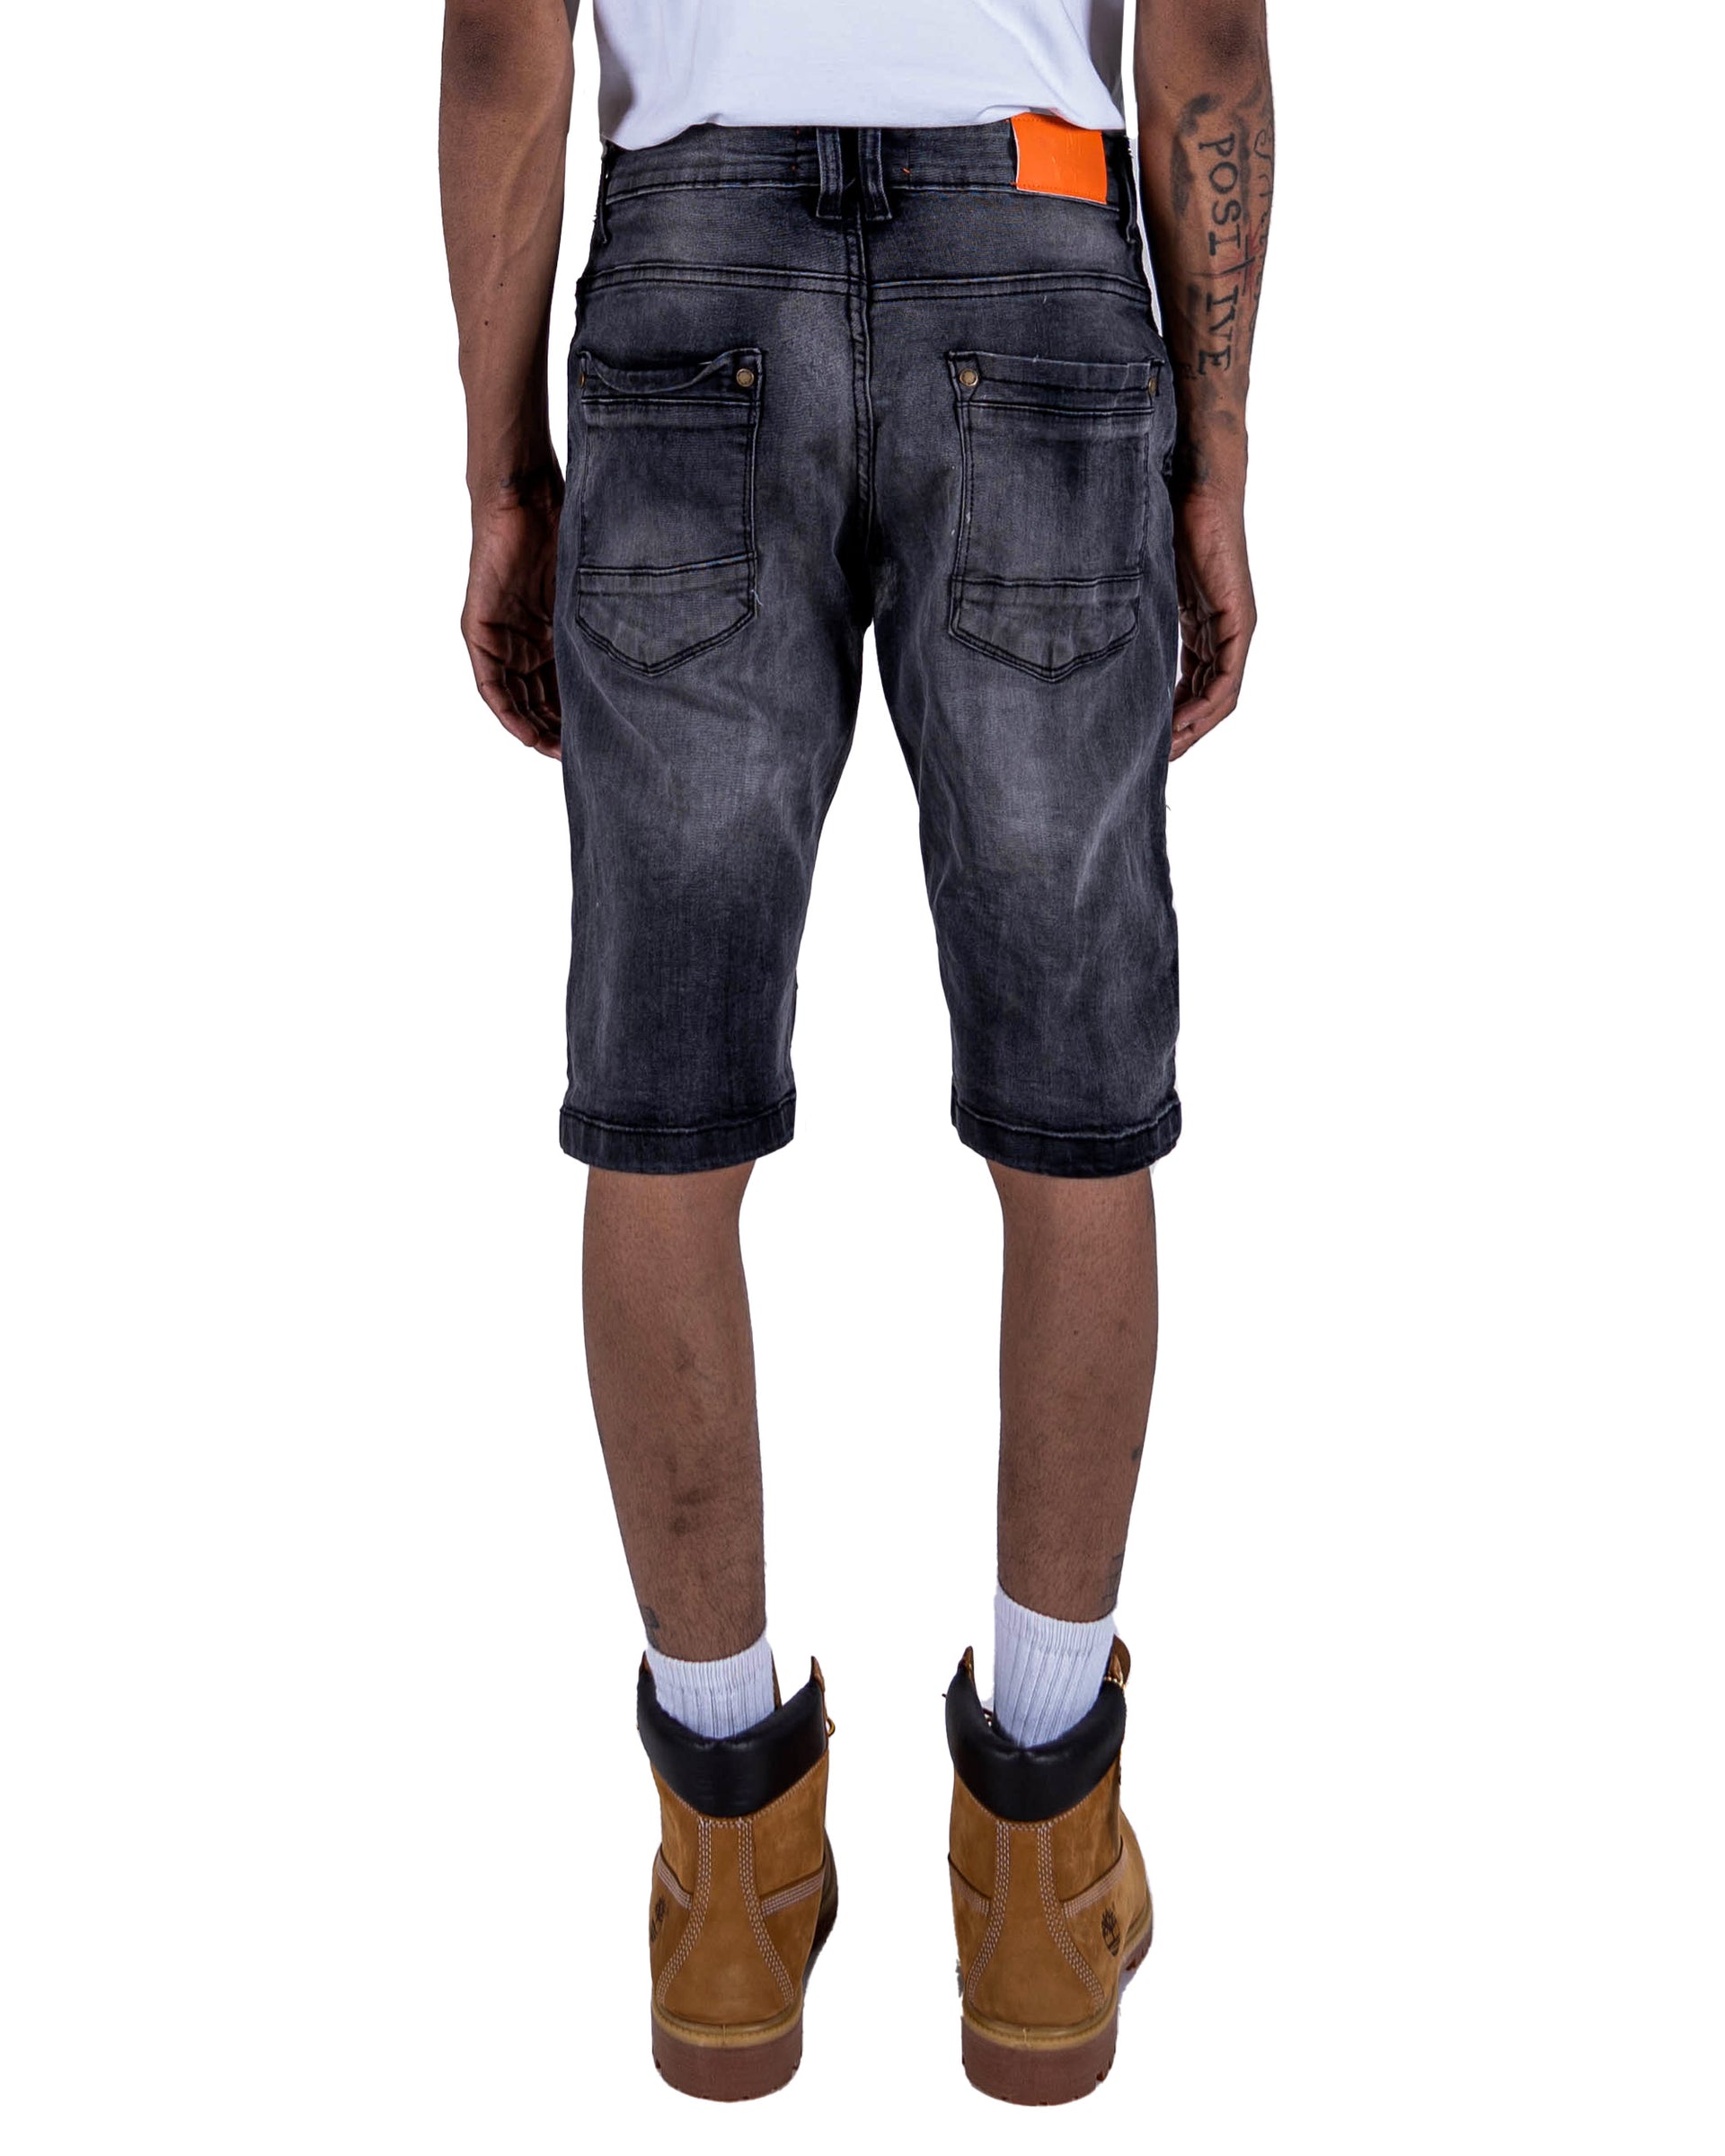 HARRISON | Men's Classic Fit Carpenter Style Distressed Denim Jean Shorts in Black Asphalt